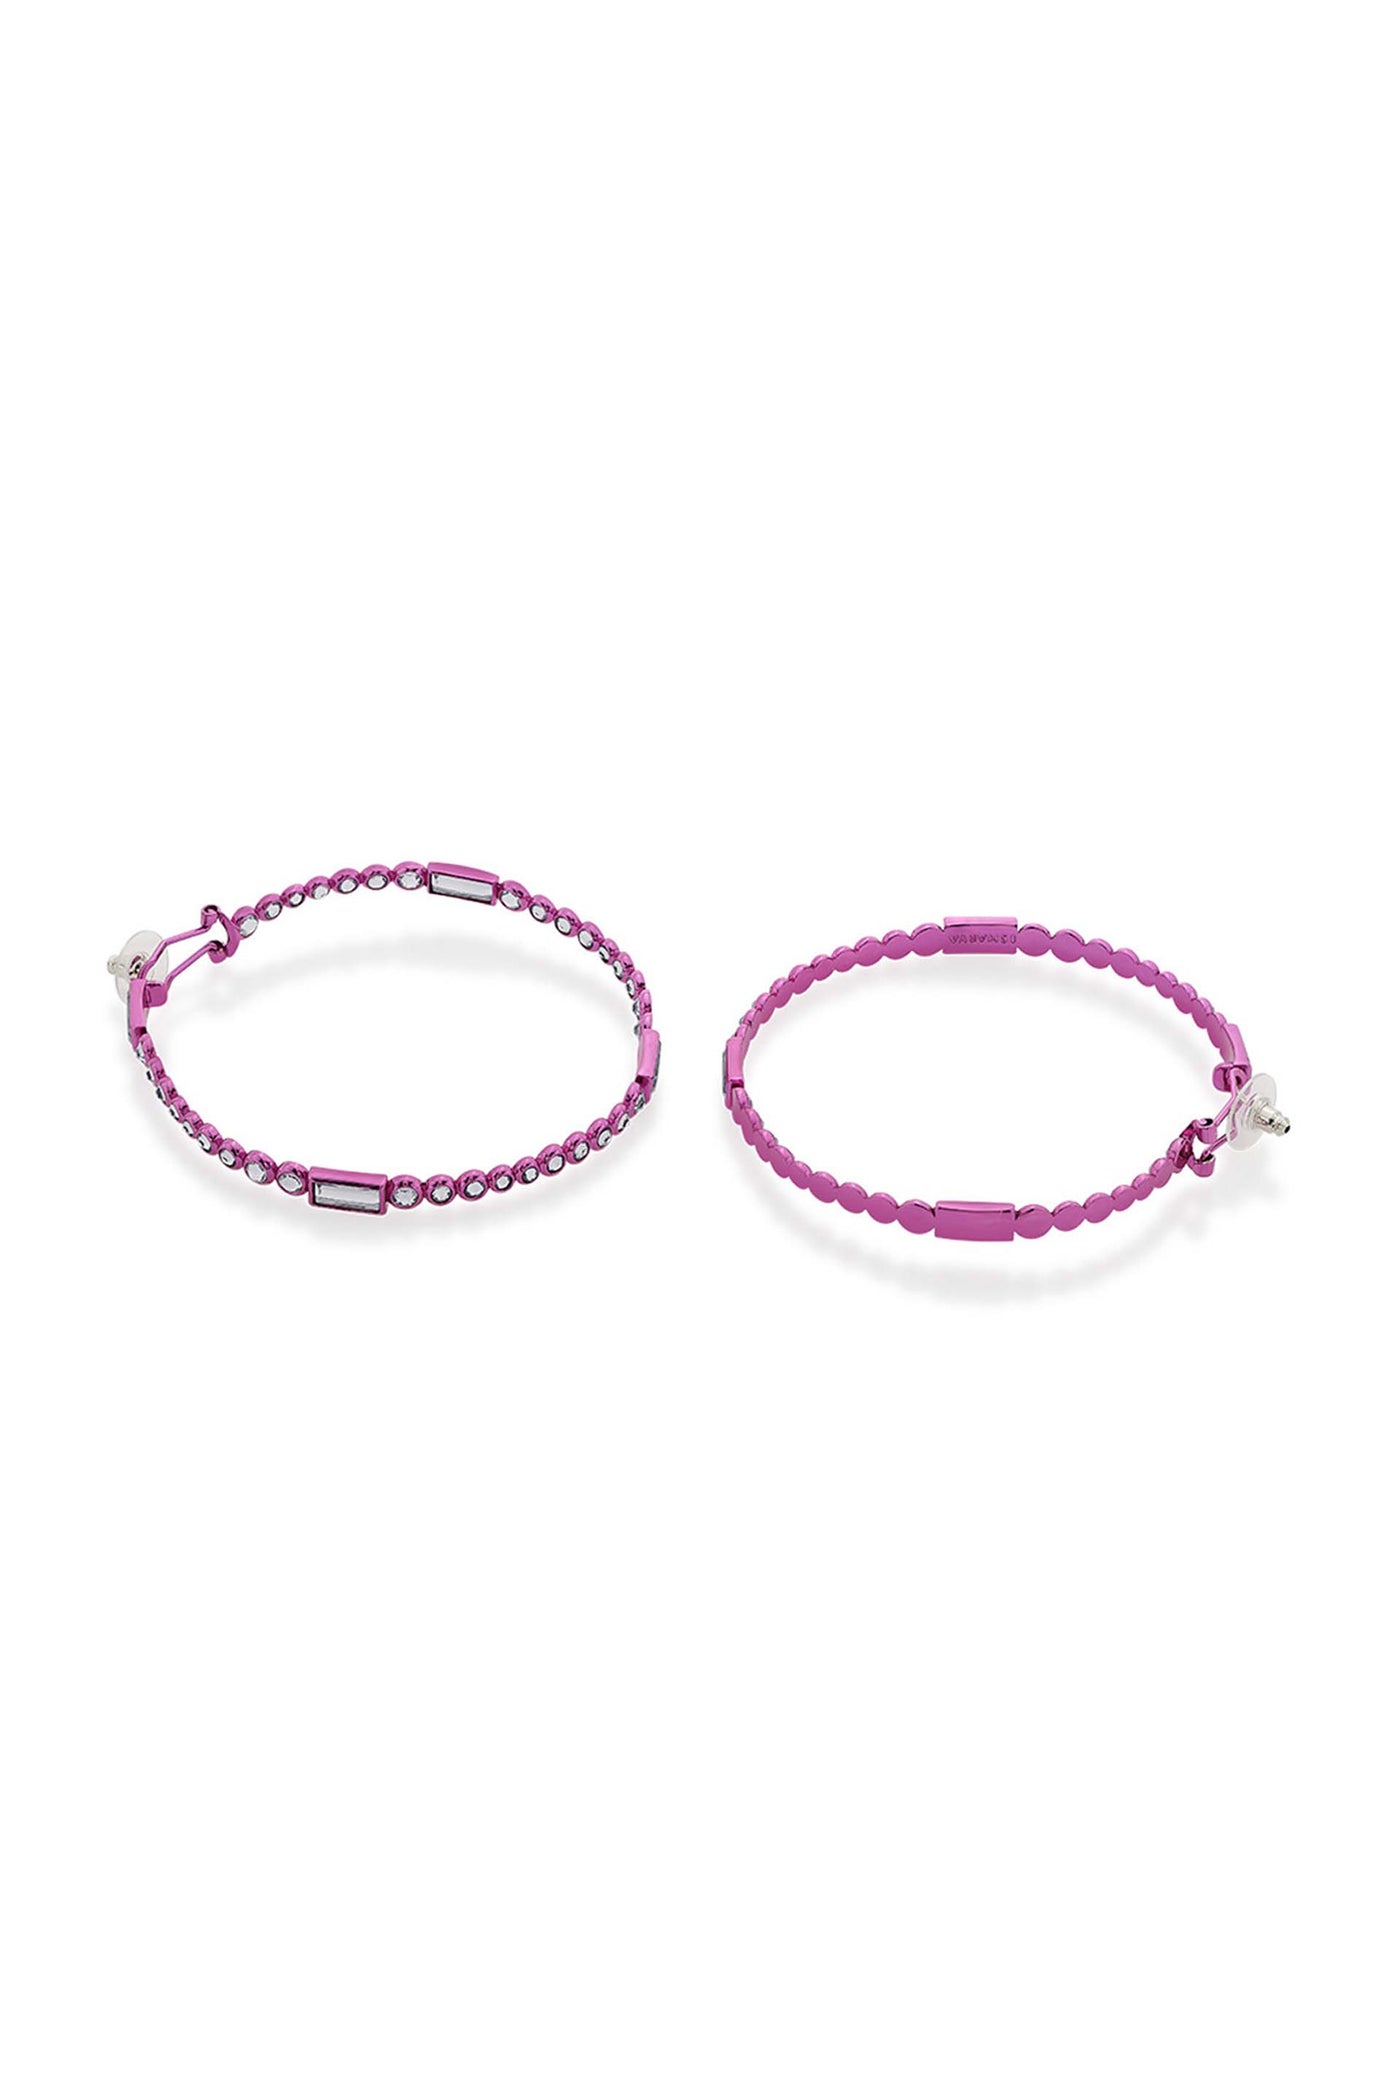 Isharya Rani Pink Oversized Hoop Earrings In Colored Plating fashion jewellery online shopping melange singapore indian designer wear